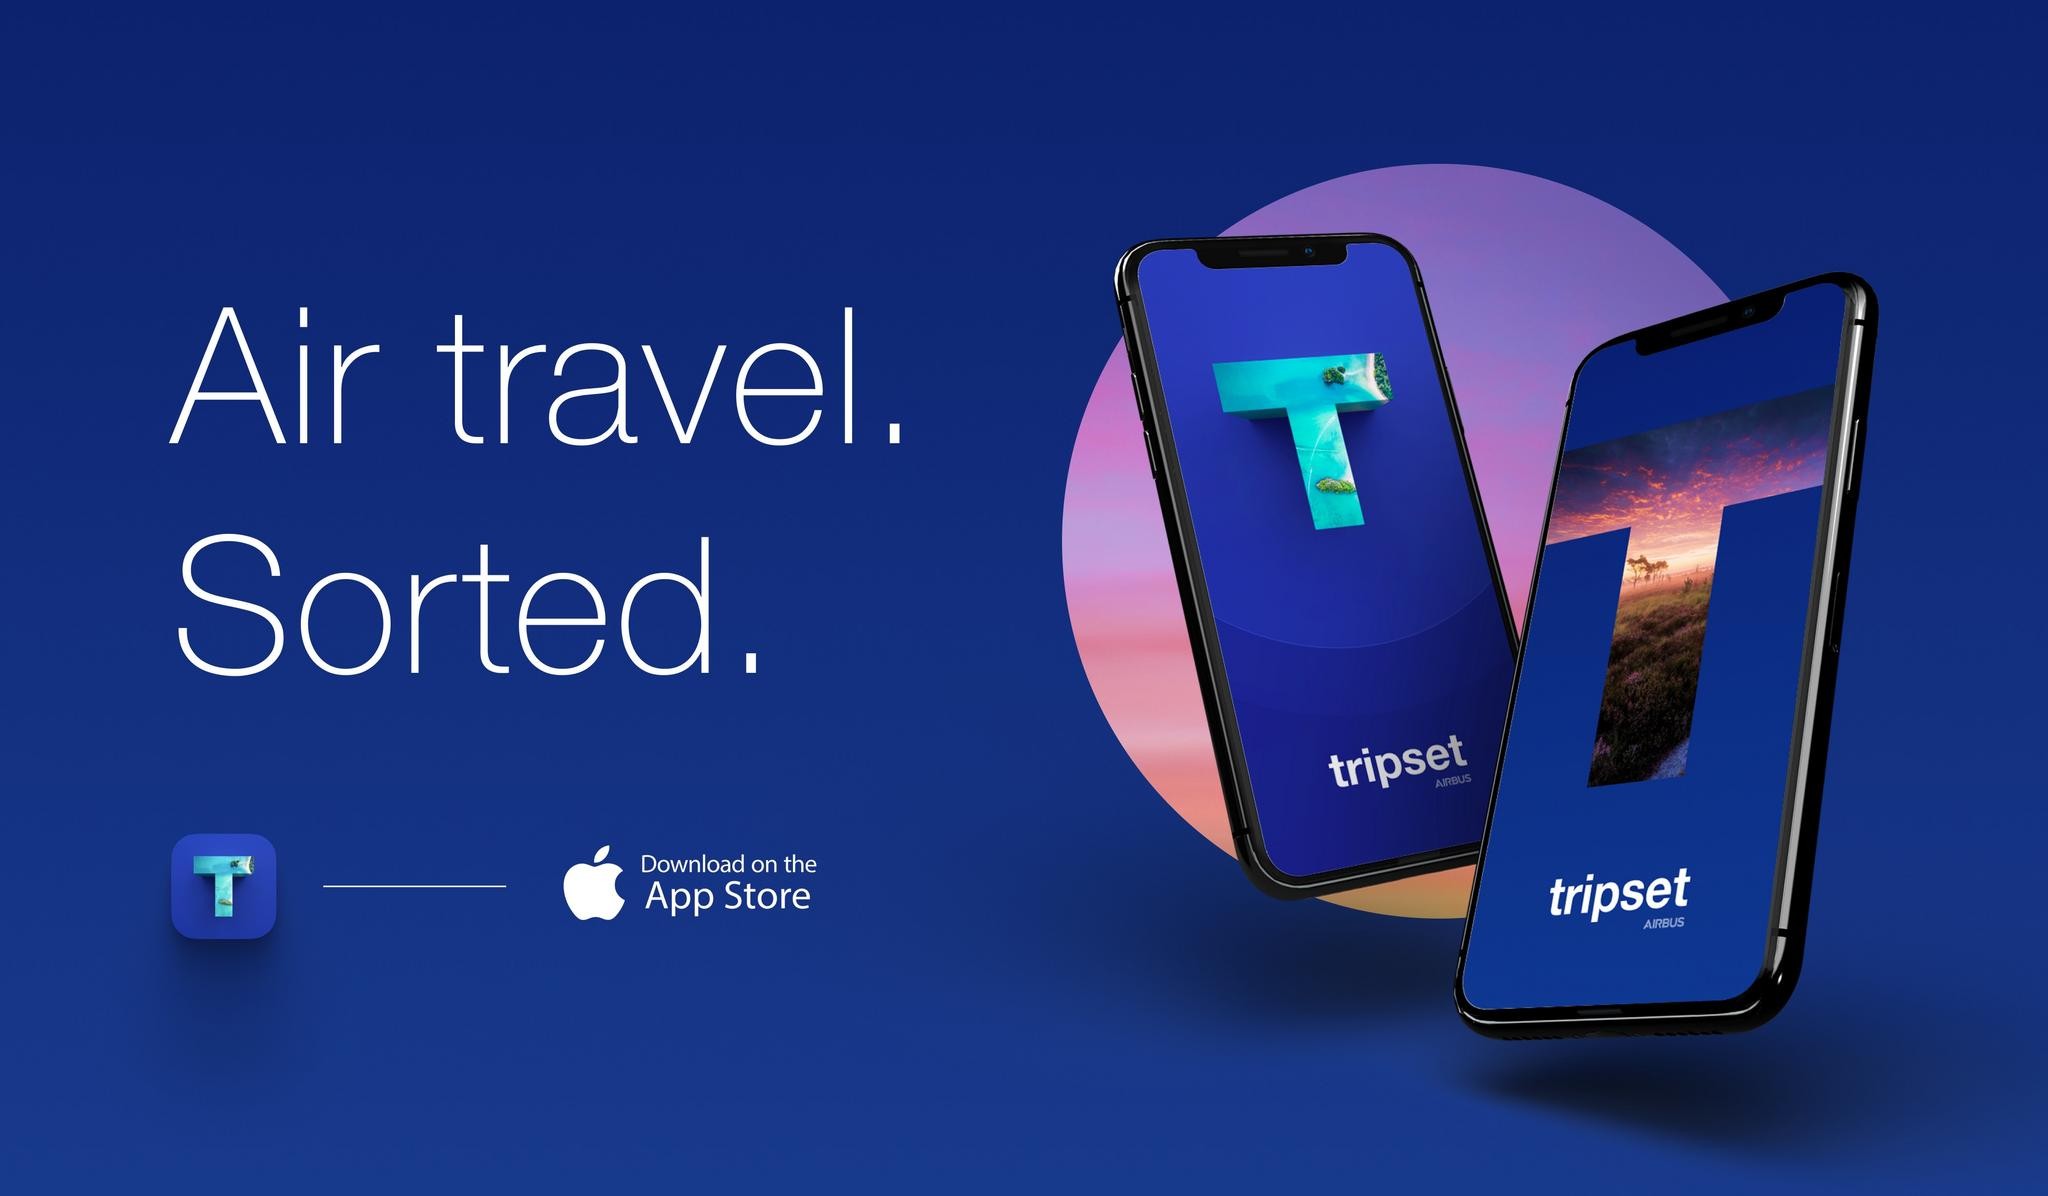 Tripset iOS app